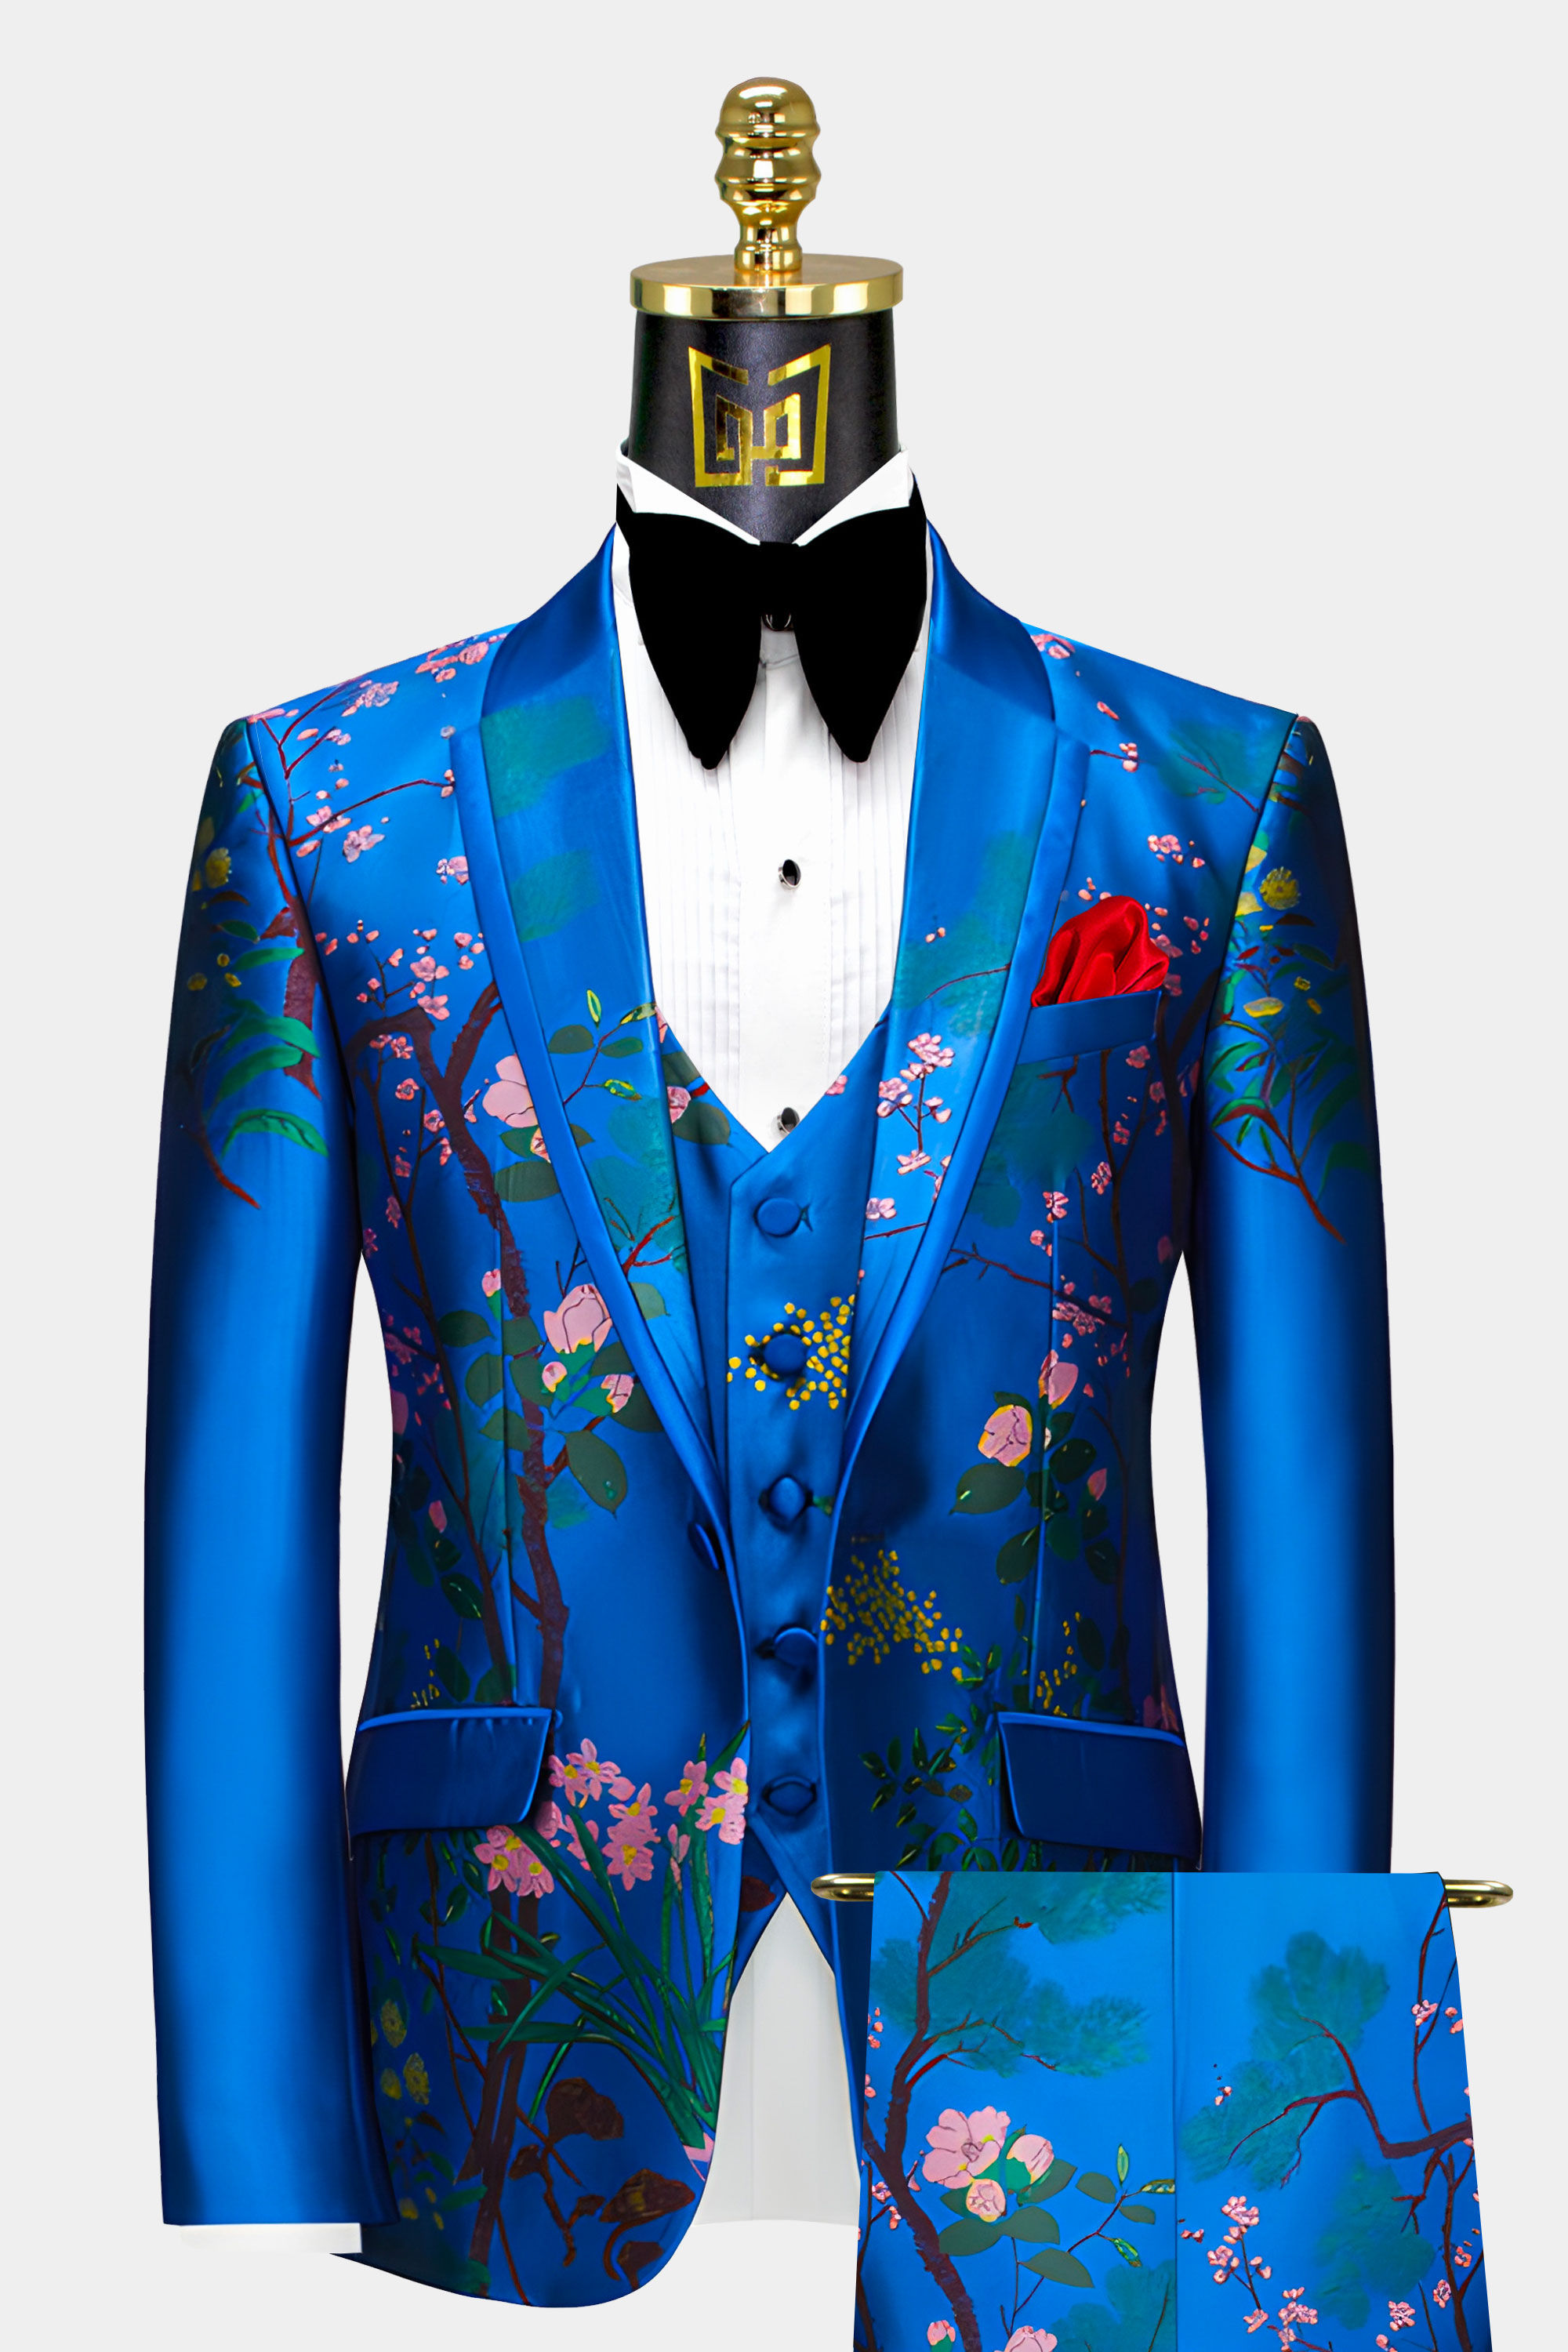 Royal-Blue-and-Pink-Tuxedo-Prom-Groom-Wedding-Suit-For-Men-from-Gentlemansguru.com